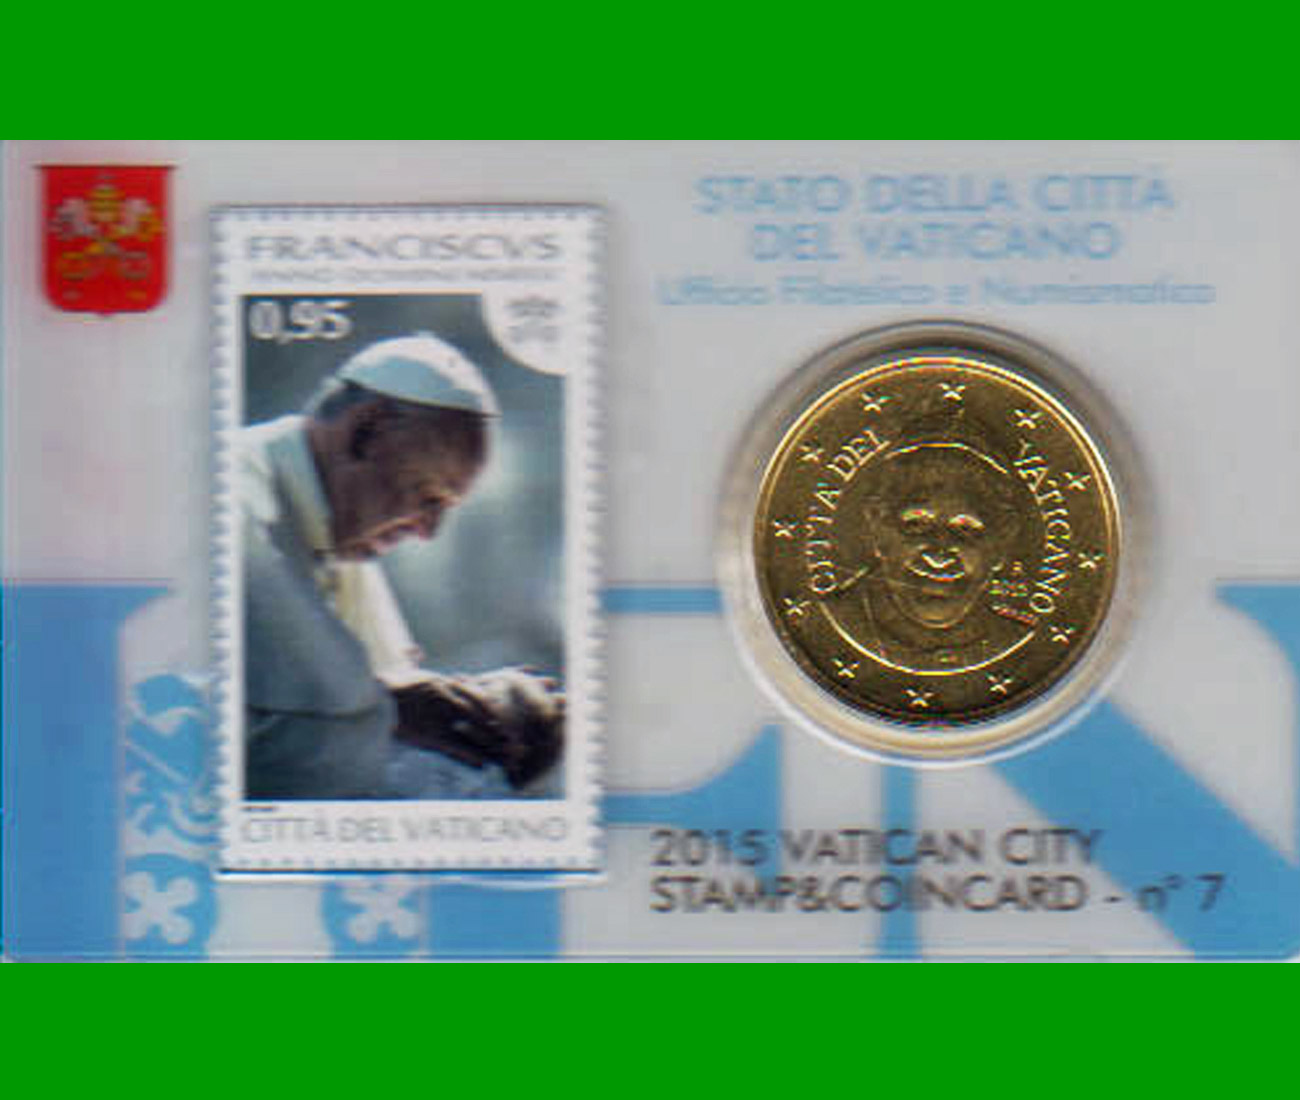  Offiz. 50 Cent Coincard mit Briefmarke 0,95€ Vatikan 2015 nur 17.500 Stück!   